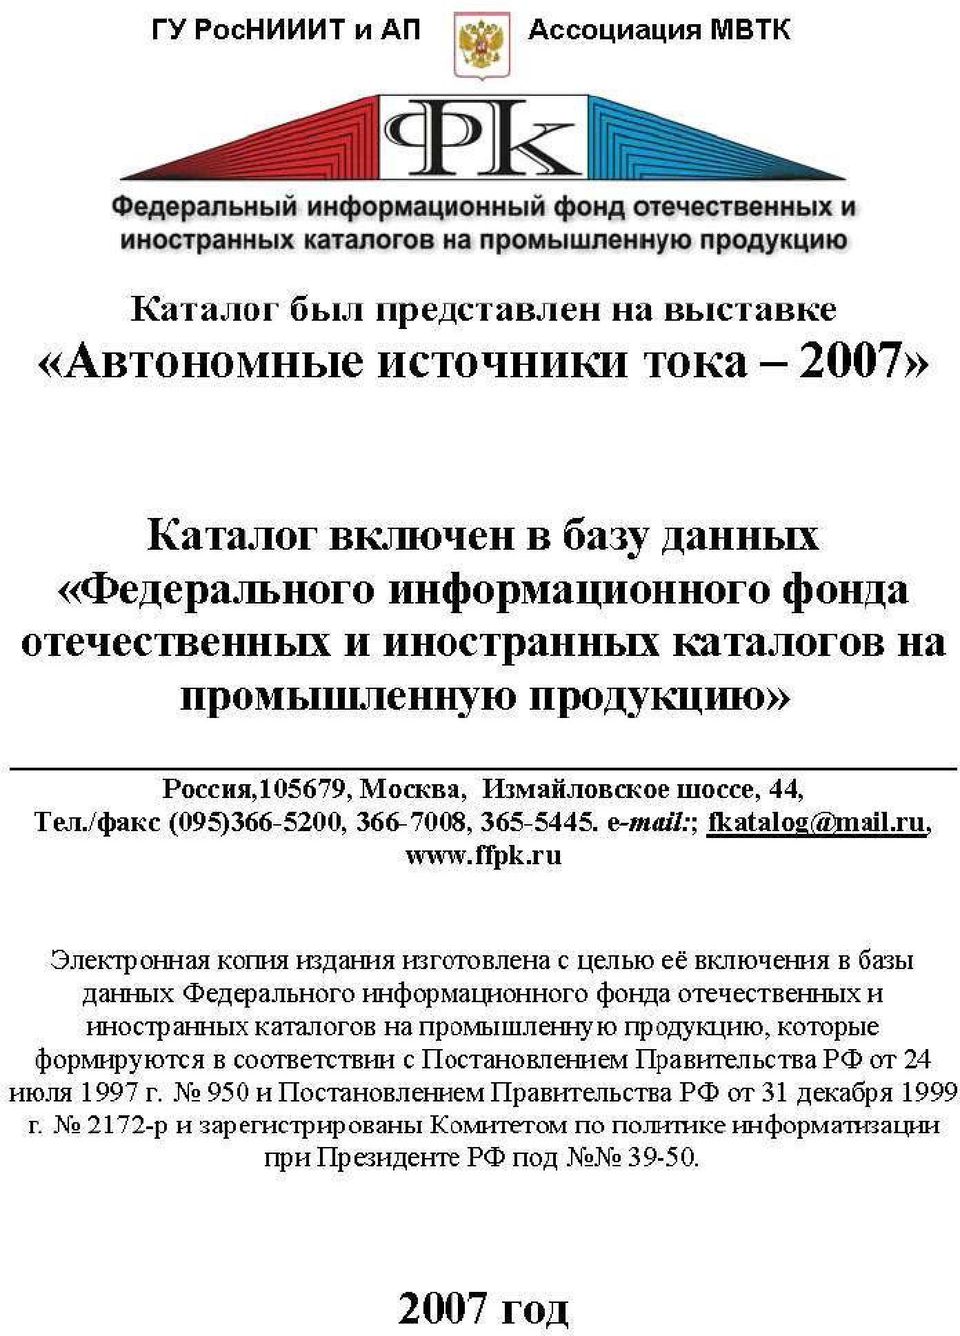 /факс (095)366-5200, 366-7008, 365-5445. e-mail:; fkatalog@maii.ru, www.flpk.